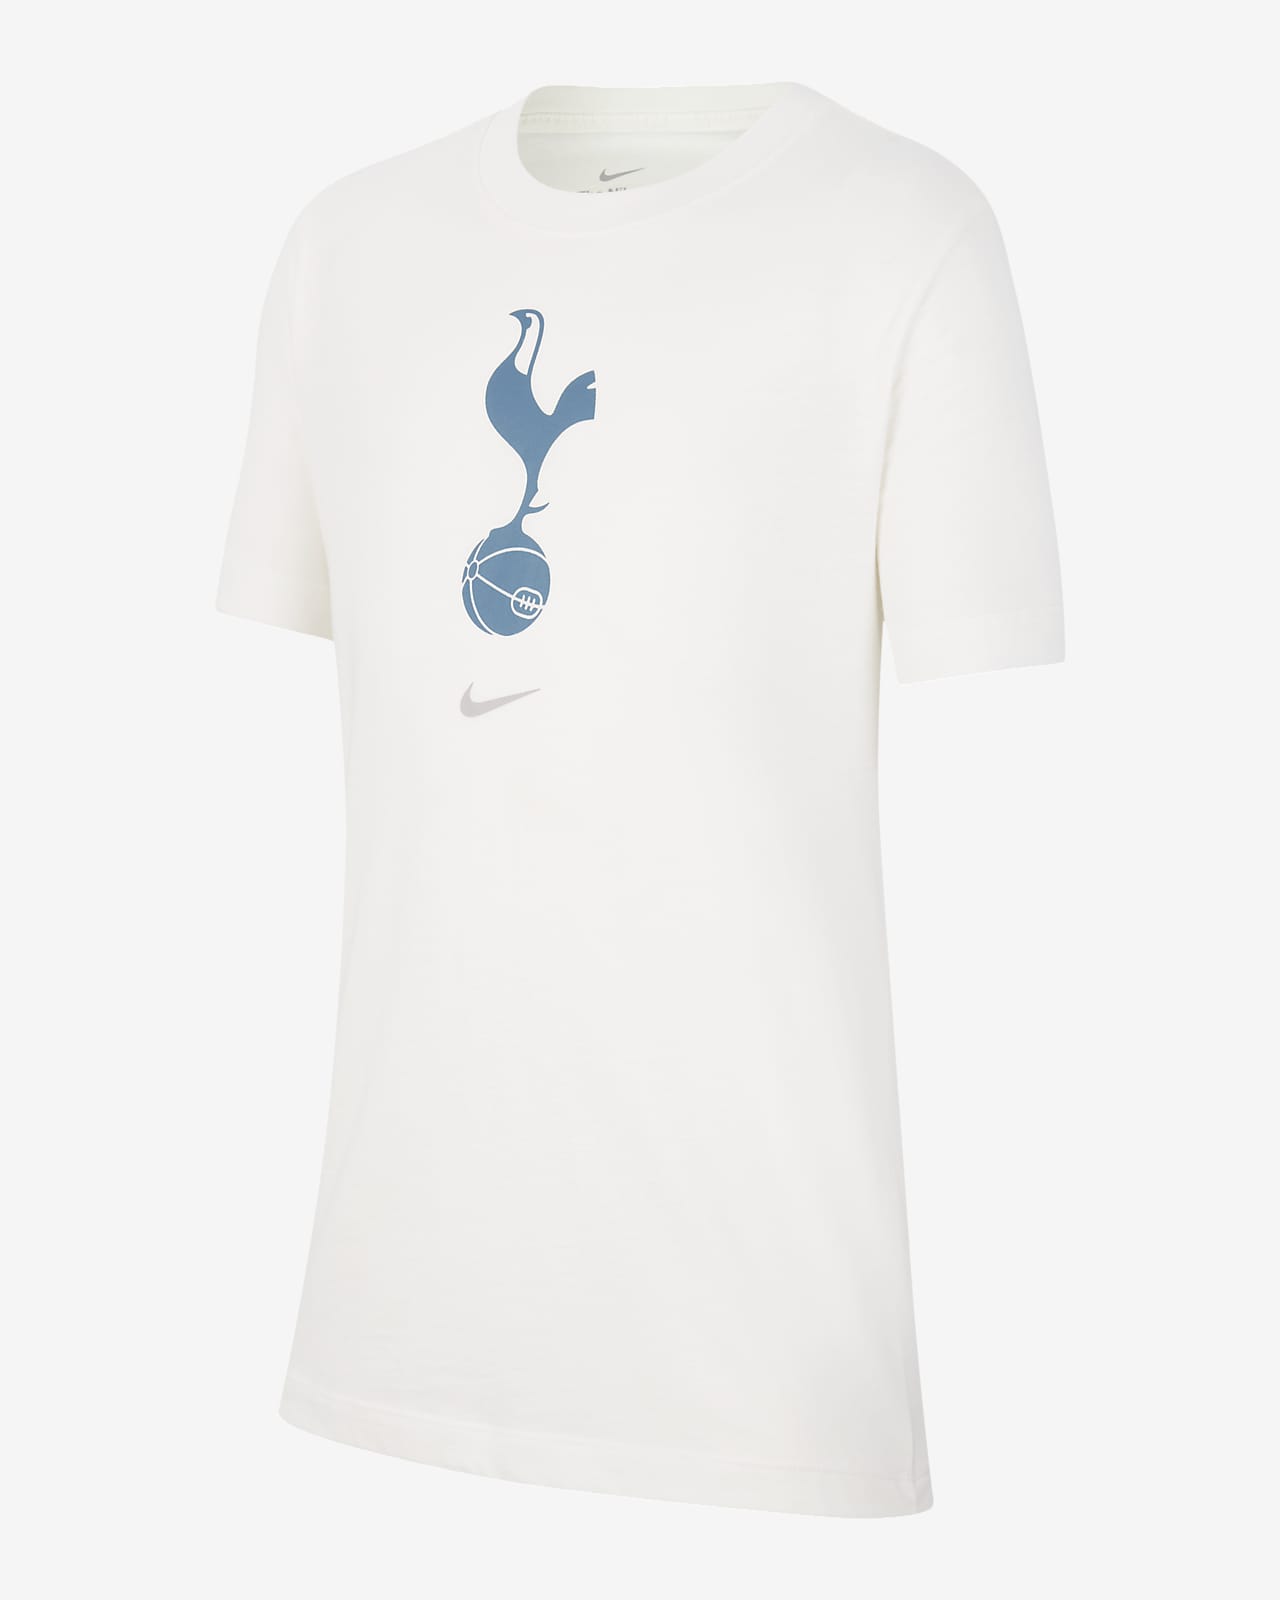 Tottenham Hotspur Crest Fußball-T-Shirt für ältere Kinder